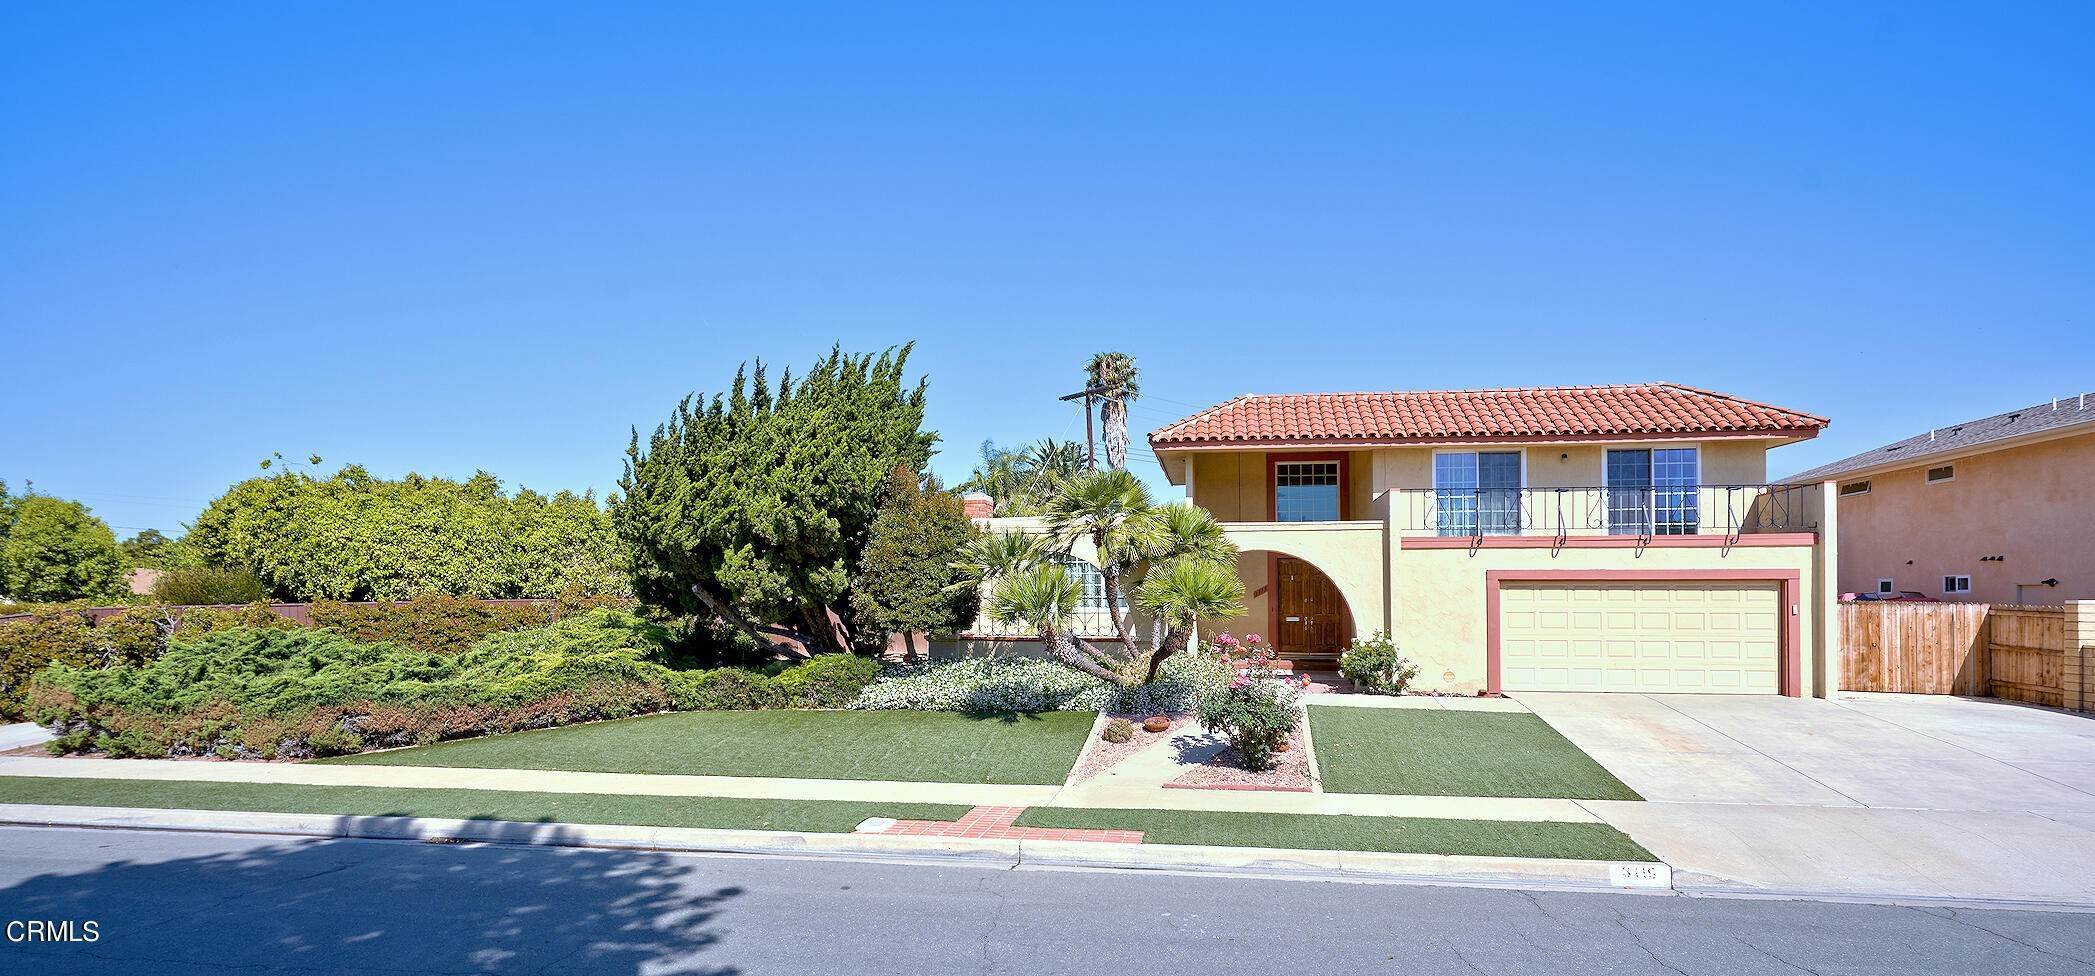 2. Single Family Homes for Sale at 3115 Dwight Avenue Camarillo, California 93010 United States